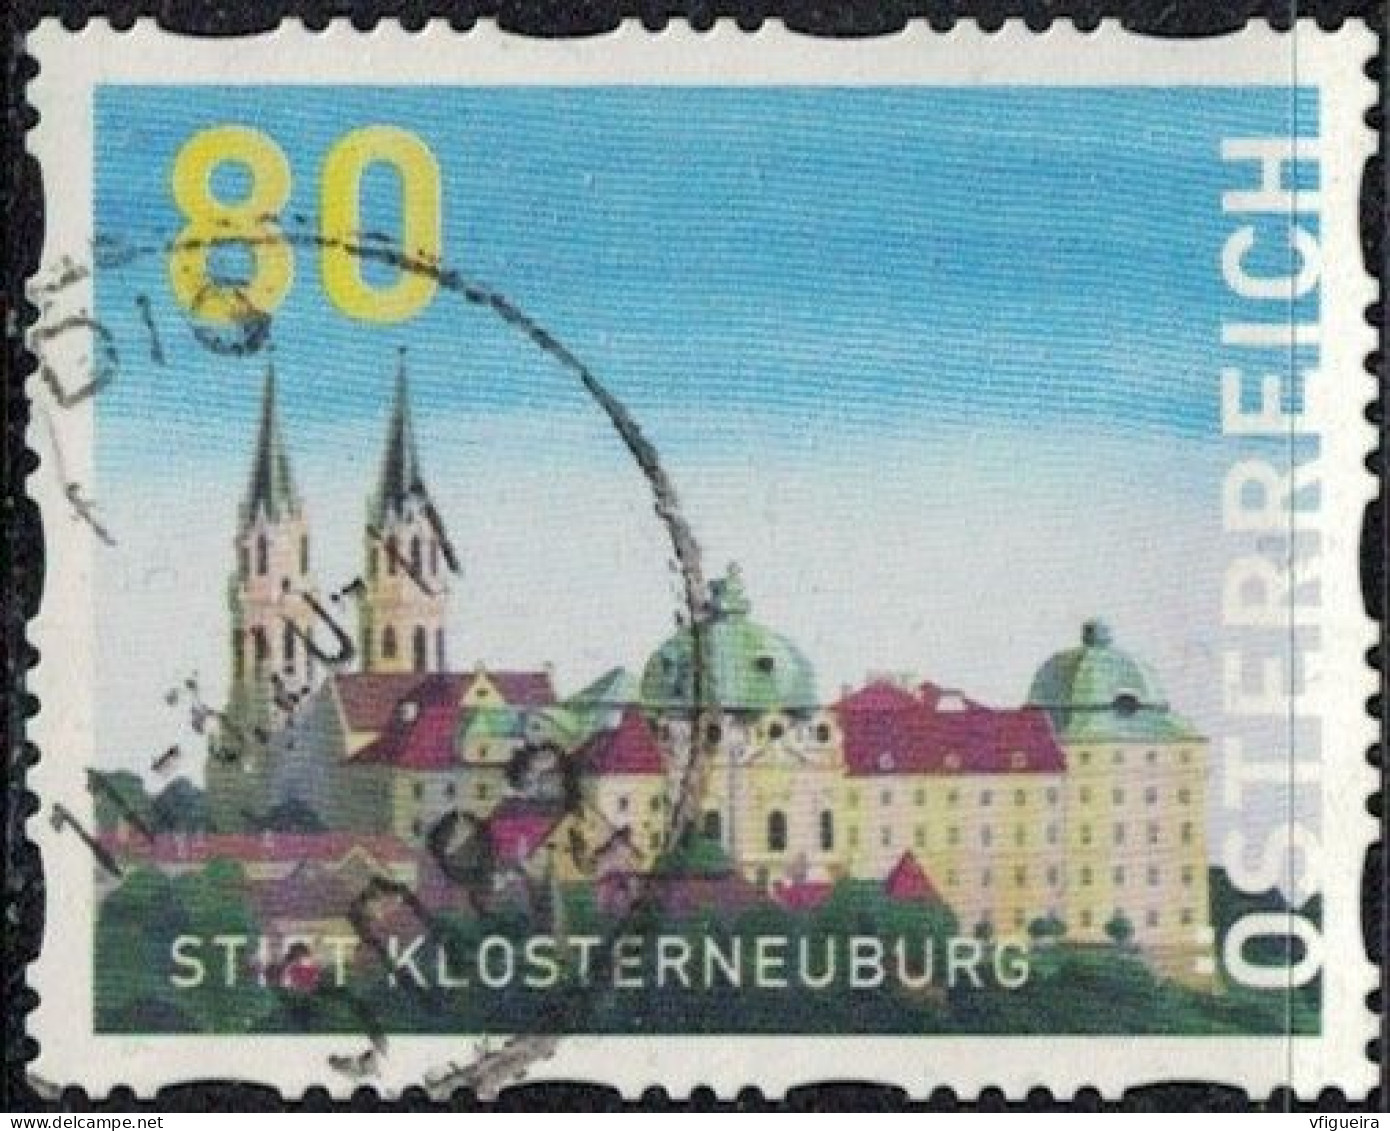 Autriche 2019 Oblitéré Used Abbaye De Klosterneuburg Chanoines Augustins Y&T AT 3326 SU - Used Stamps